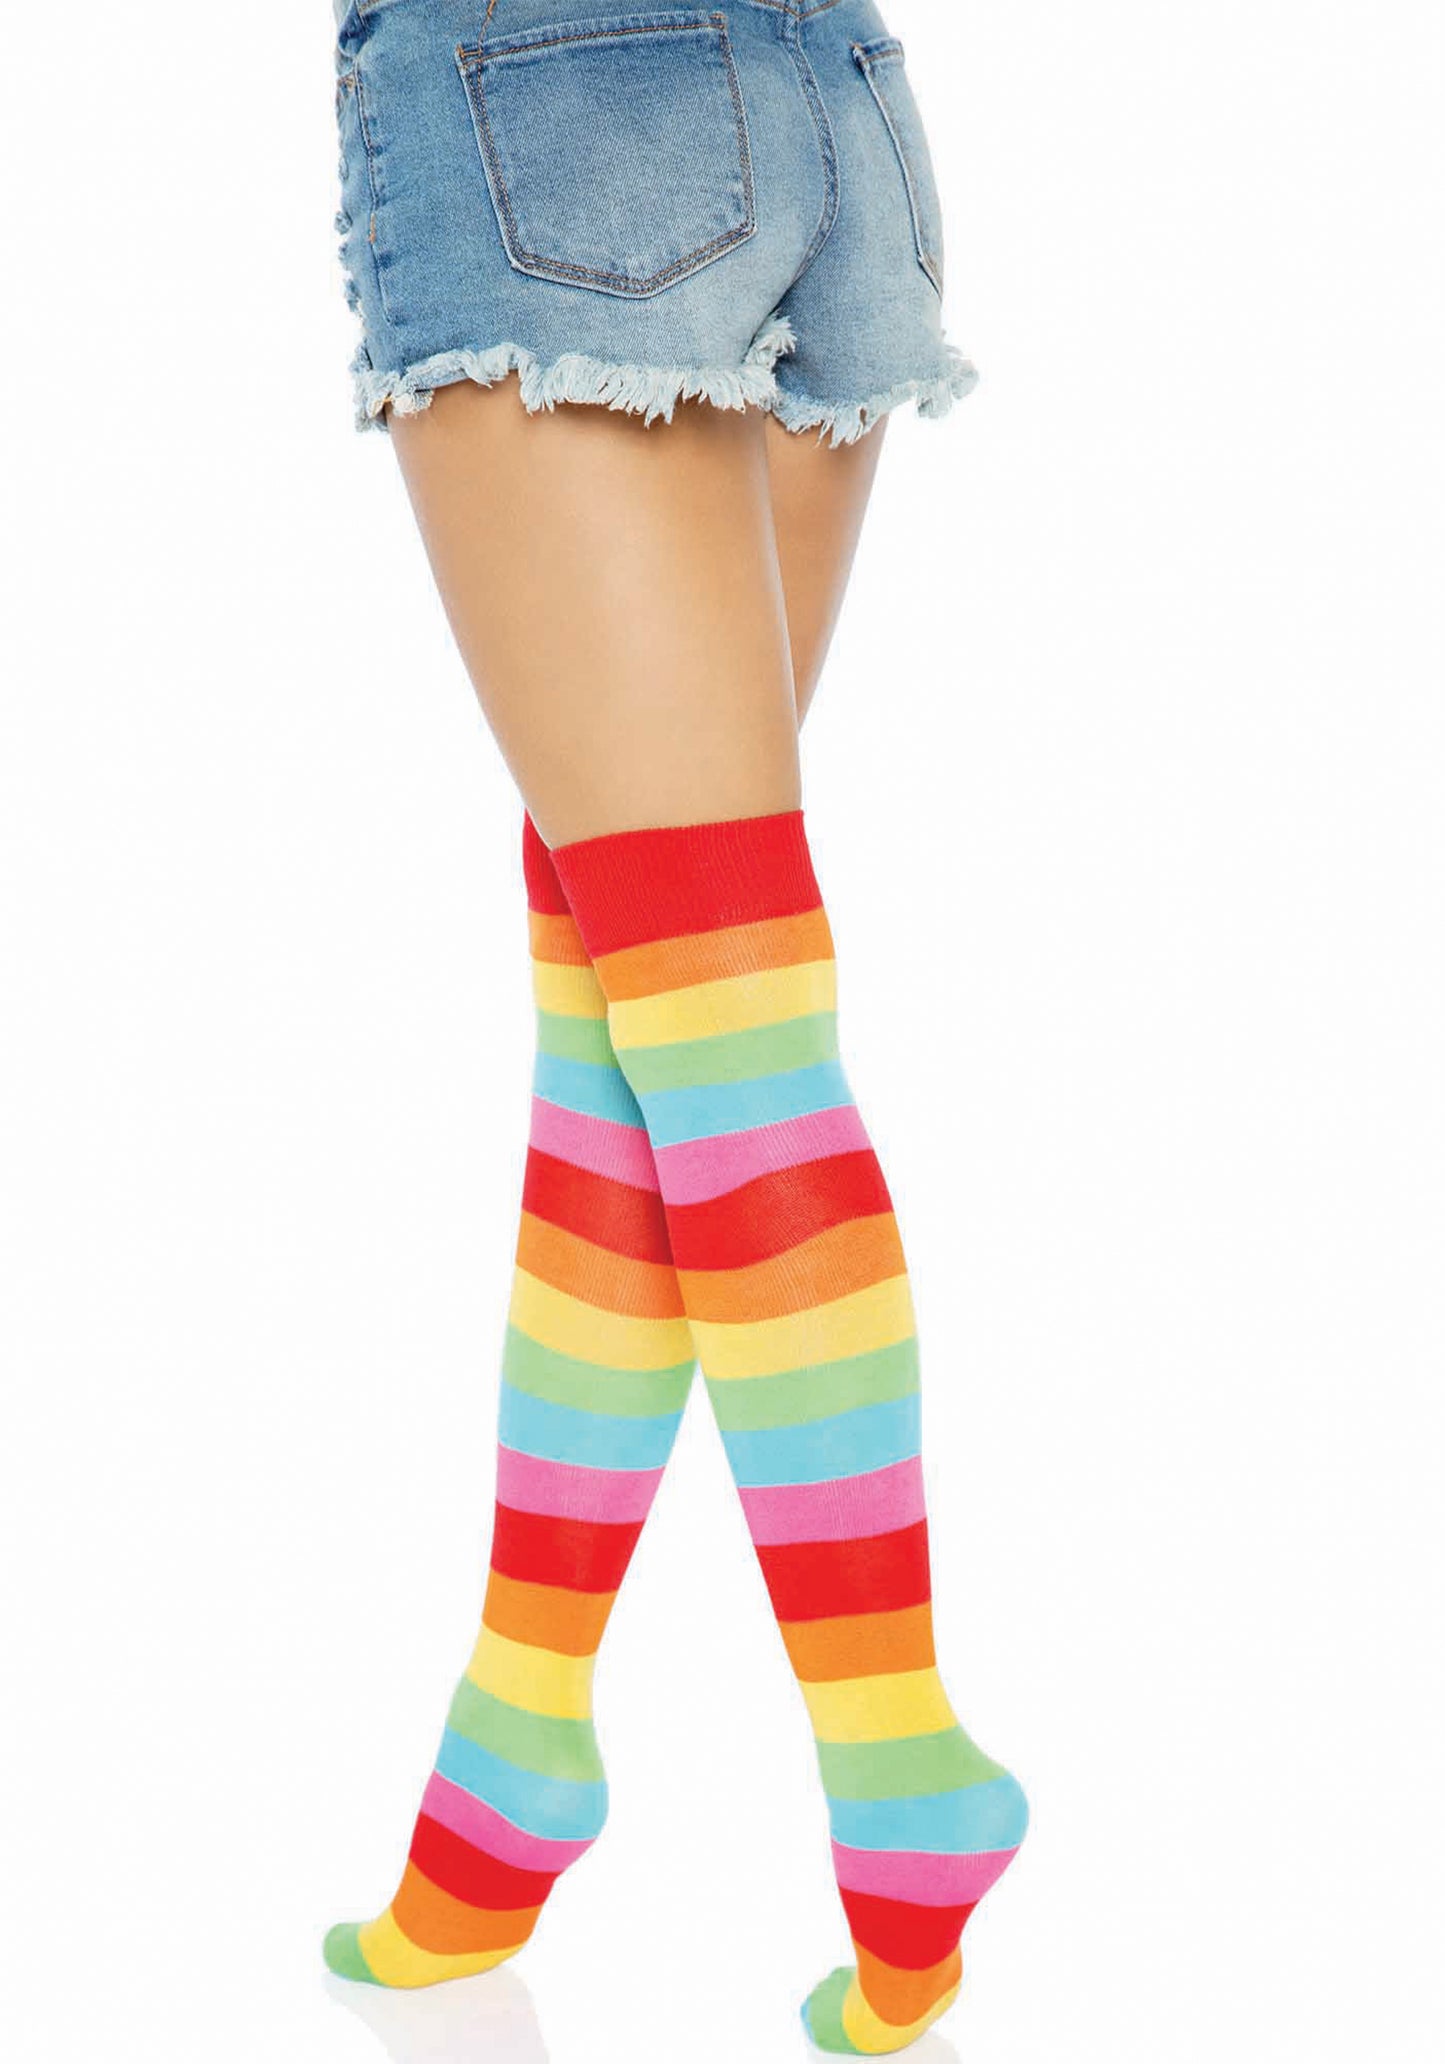 Leg Avenue 6334 Rainbow Thigh-High Socks - Multicoloured horizontal stripe over the knee socks with elasticated cuff.